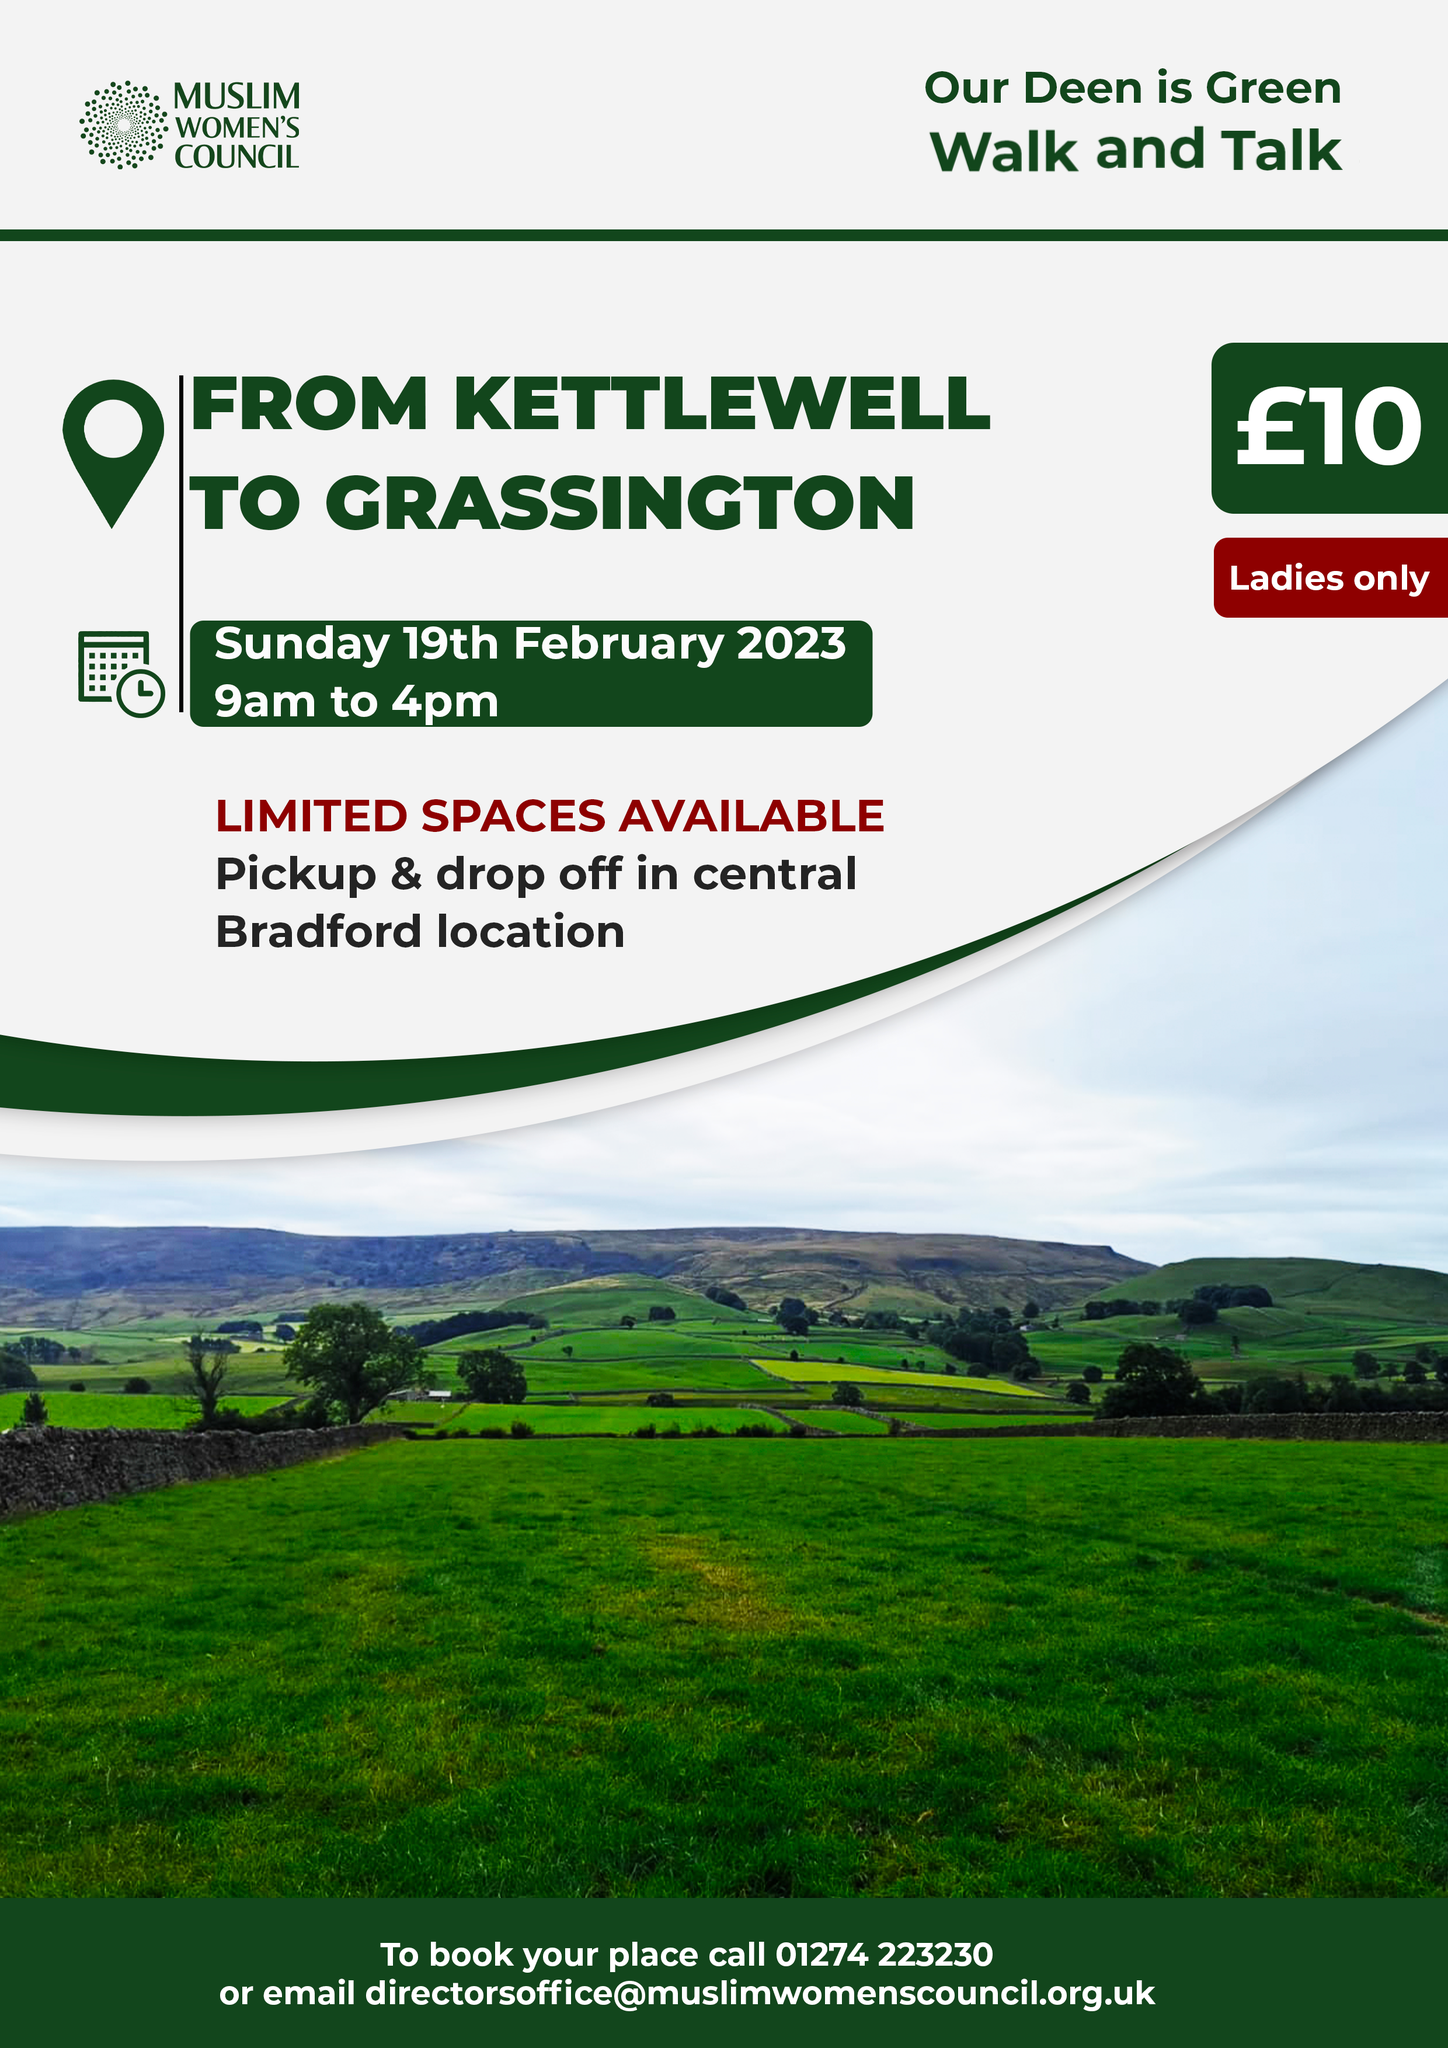 Our Deen is Green: Walk & Talk from Kettlewell to Grassington